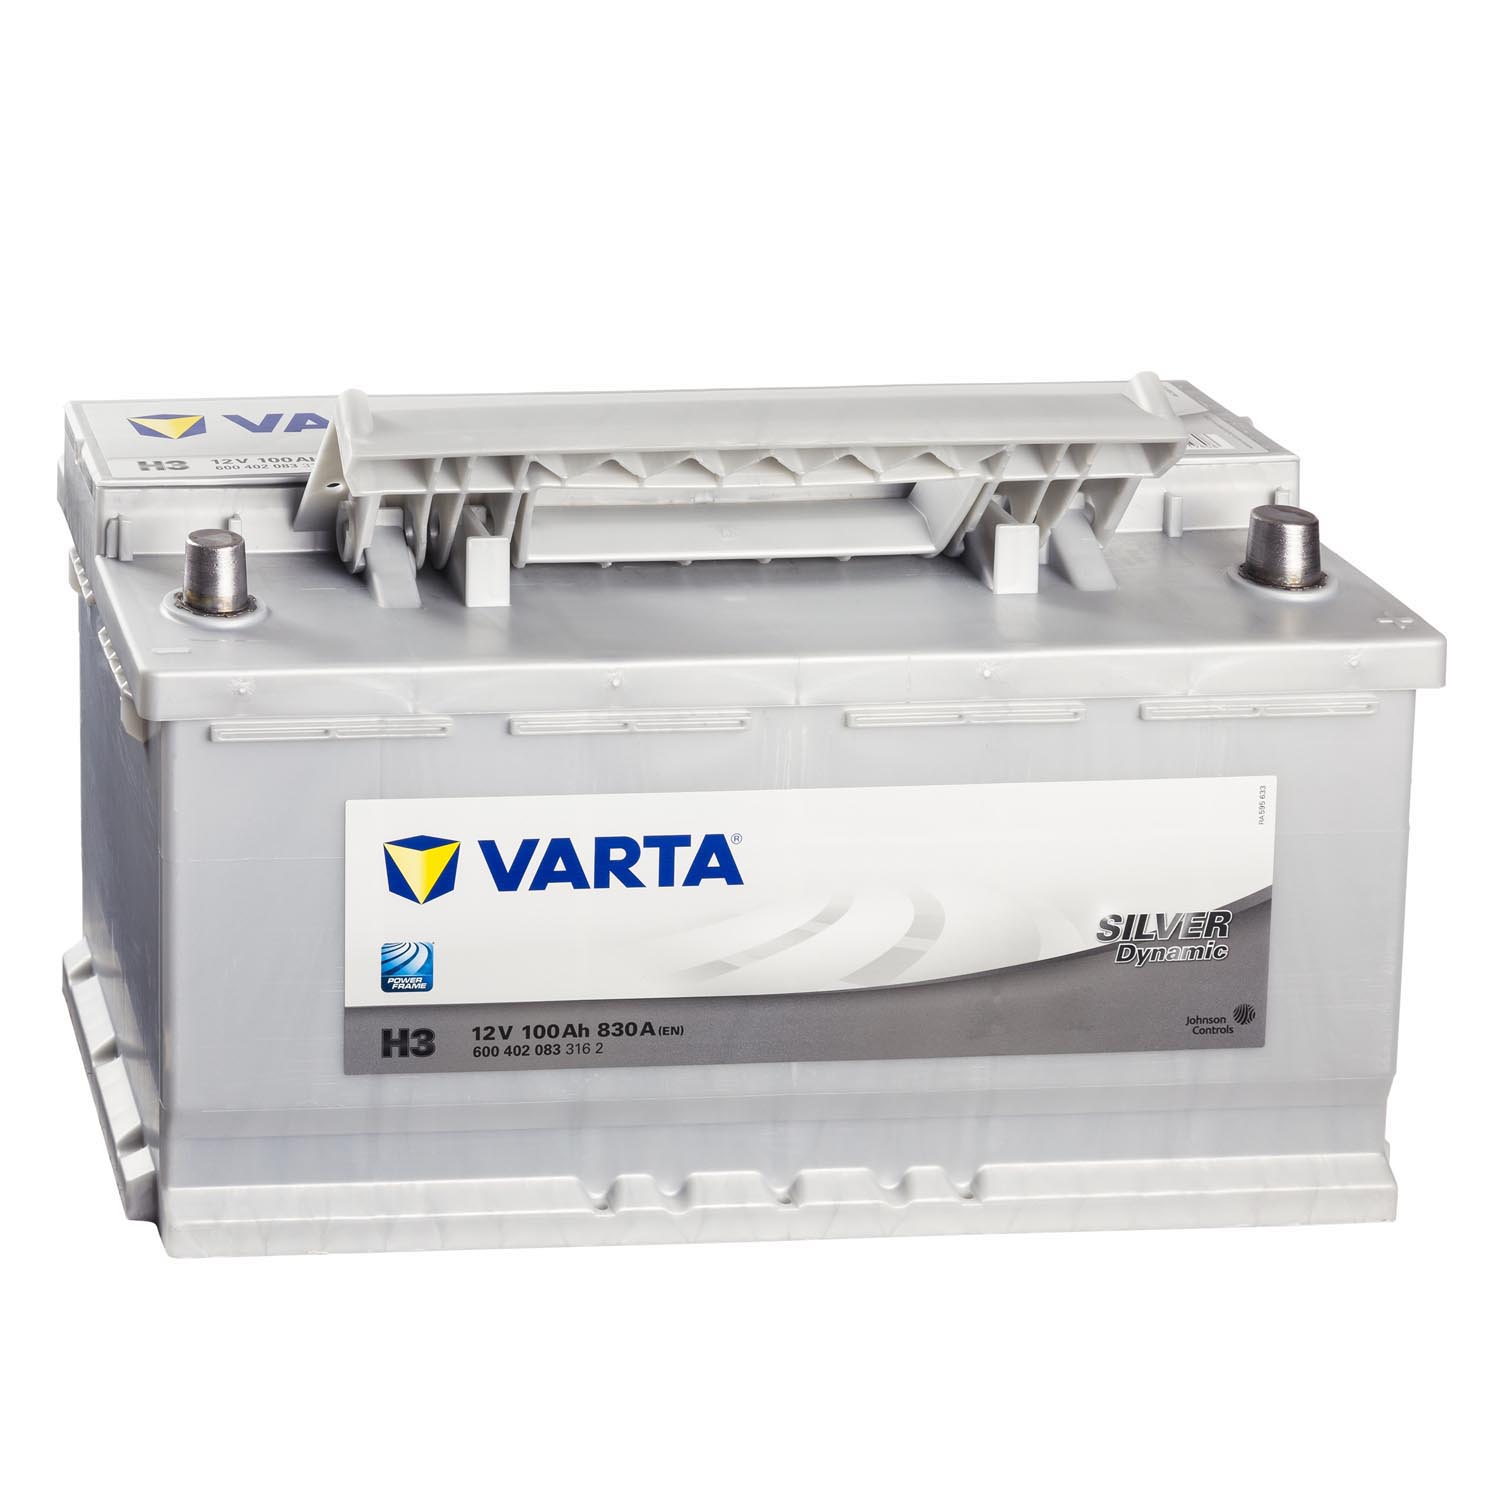 VARTA H3 Silver Dynamic 12V 100Ah 830A Autobatterie 600 402 083, Starterbatterie, Boot, Batterien für